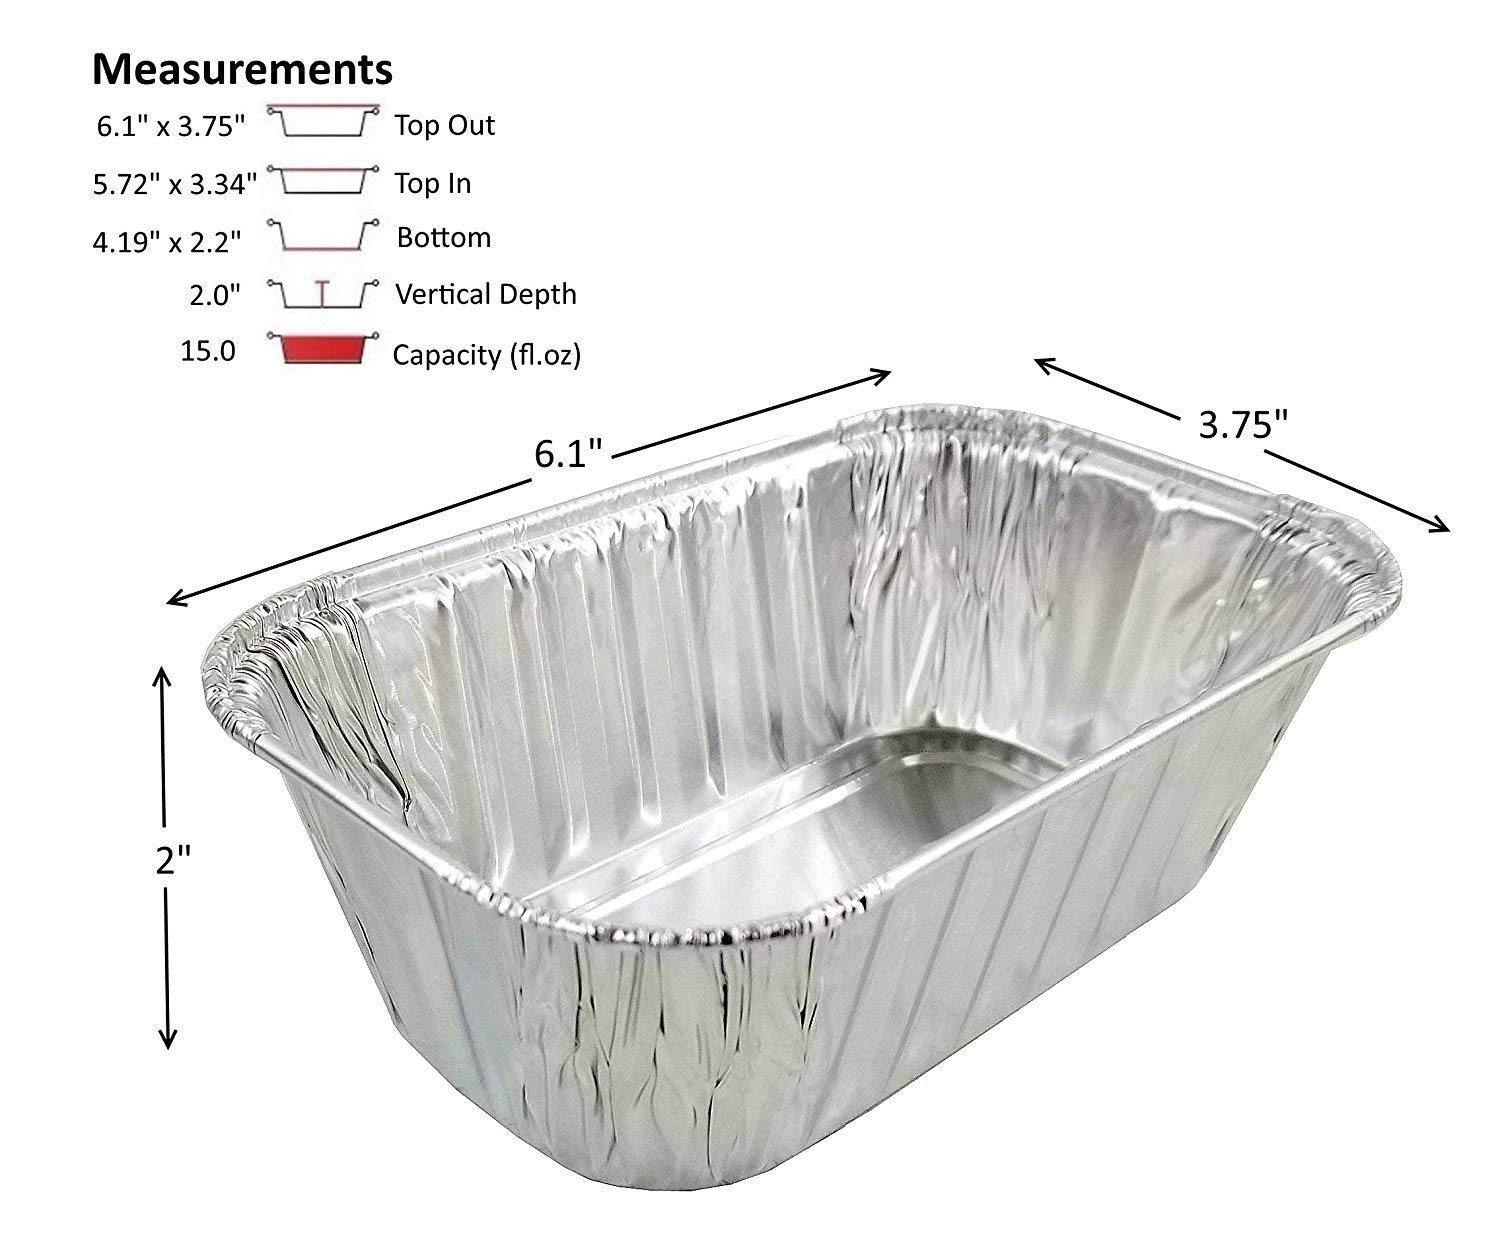 Pactogo Disposable 1 lb. Aluminum Foil Mini Loaf Pans with Clear Low Dome Lids (Pack of 40 Sets)